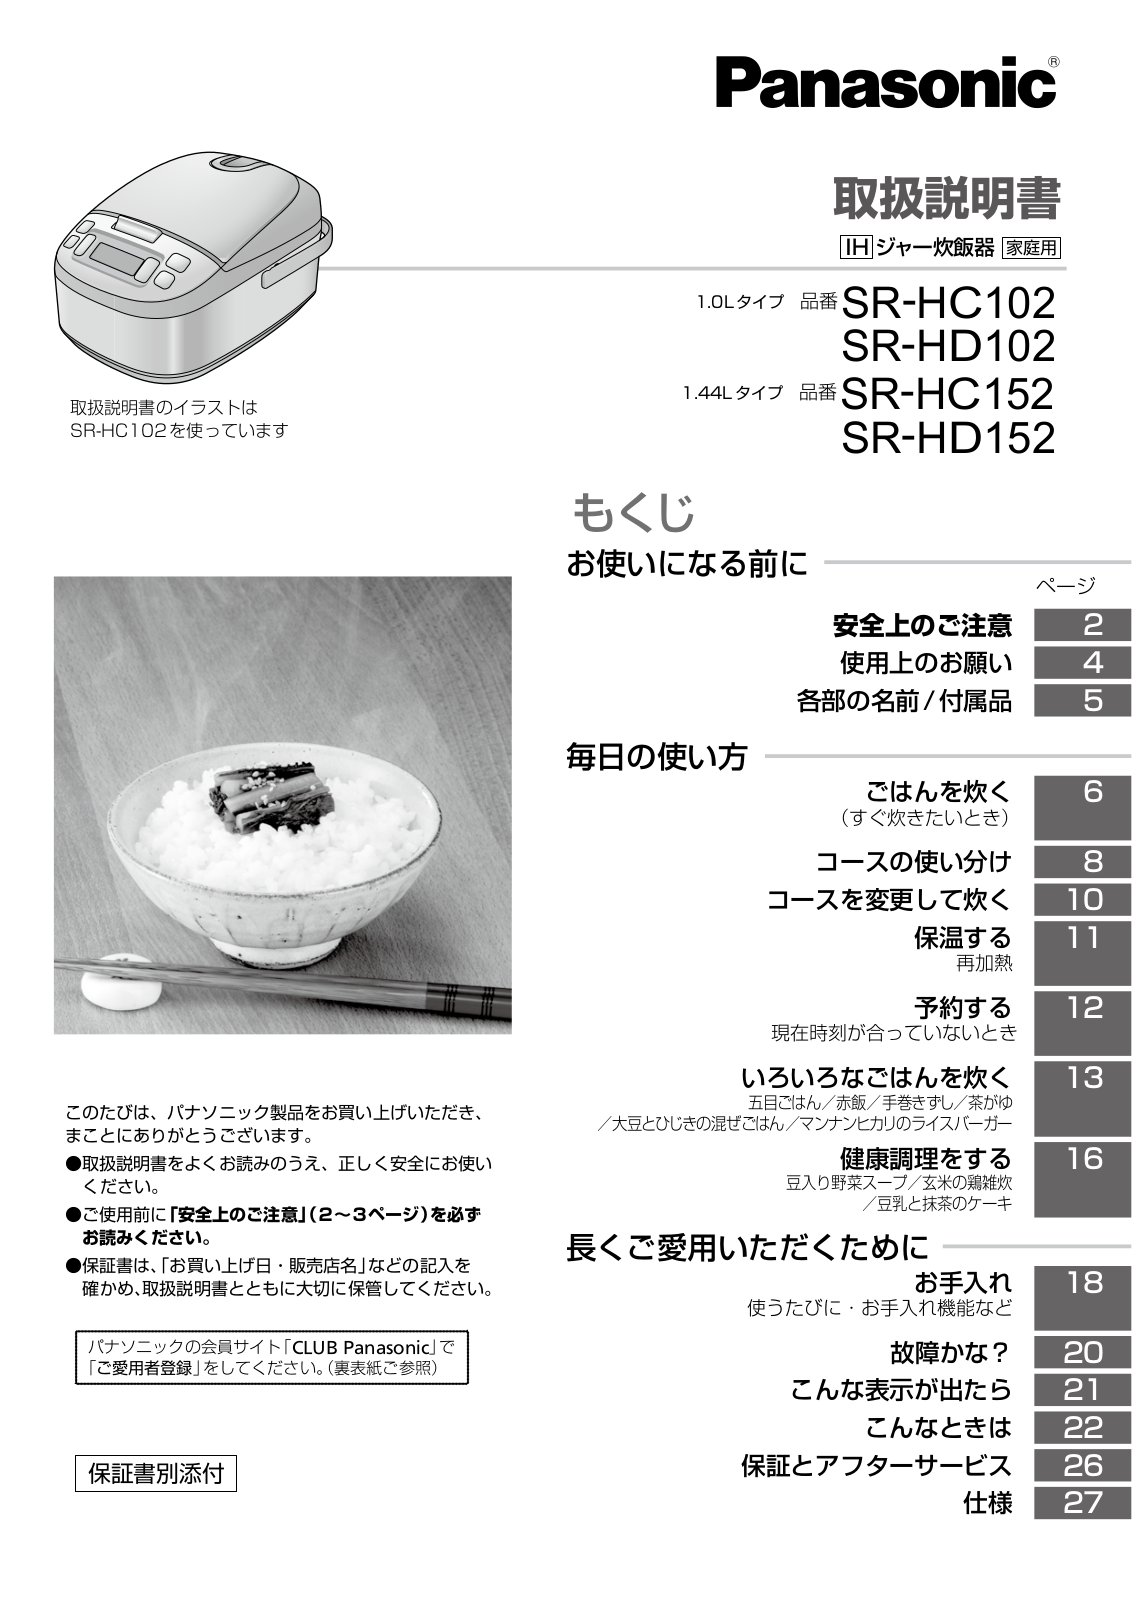 Panasonic SR-HC102, SR-HD102, SR-HC152, SR-HD152 User guide